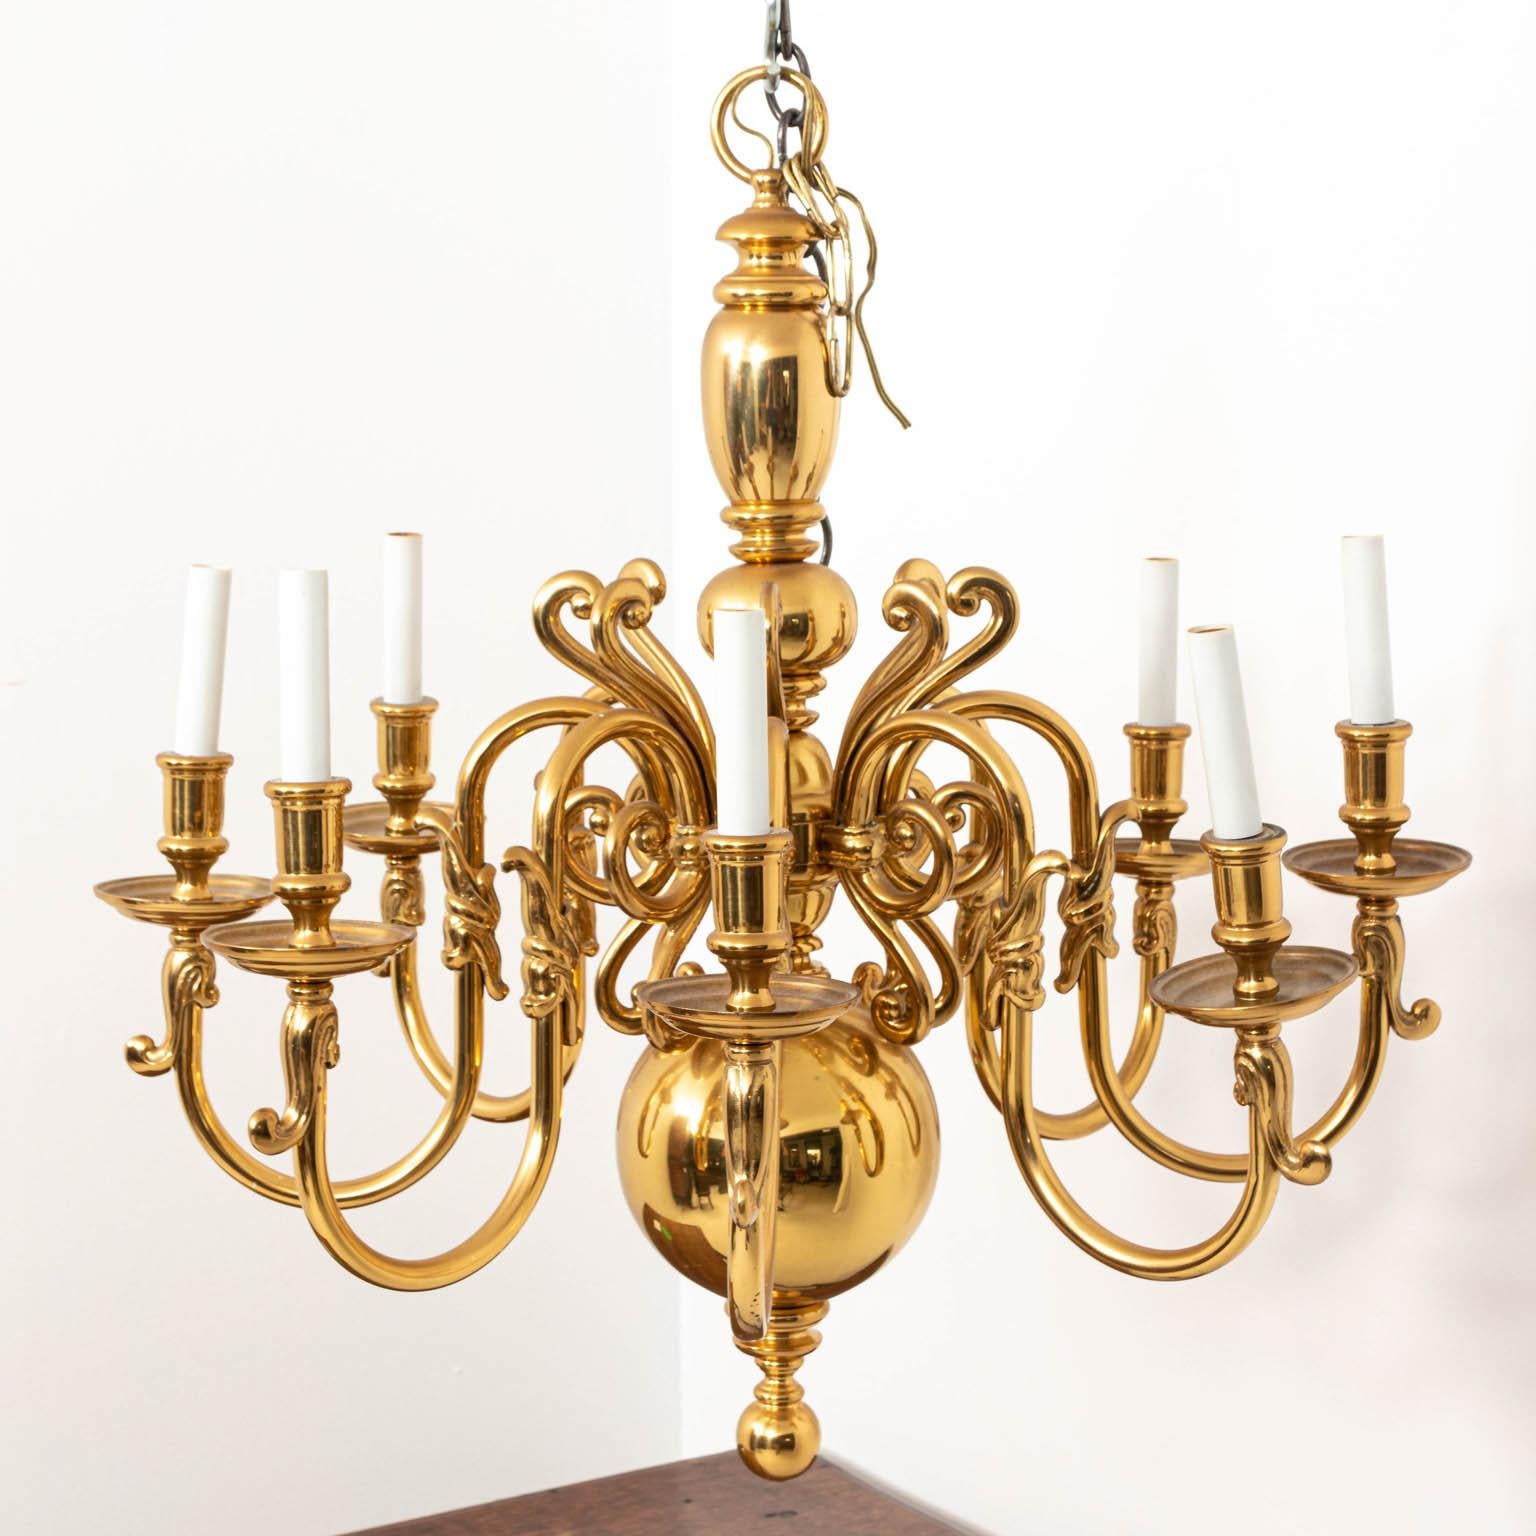 large brass chandelier